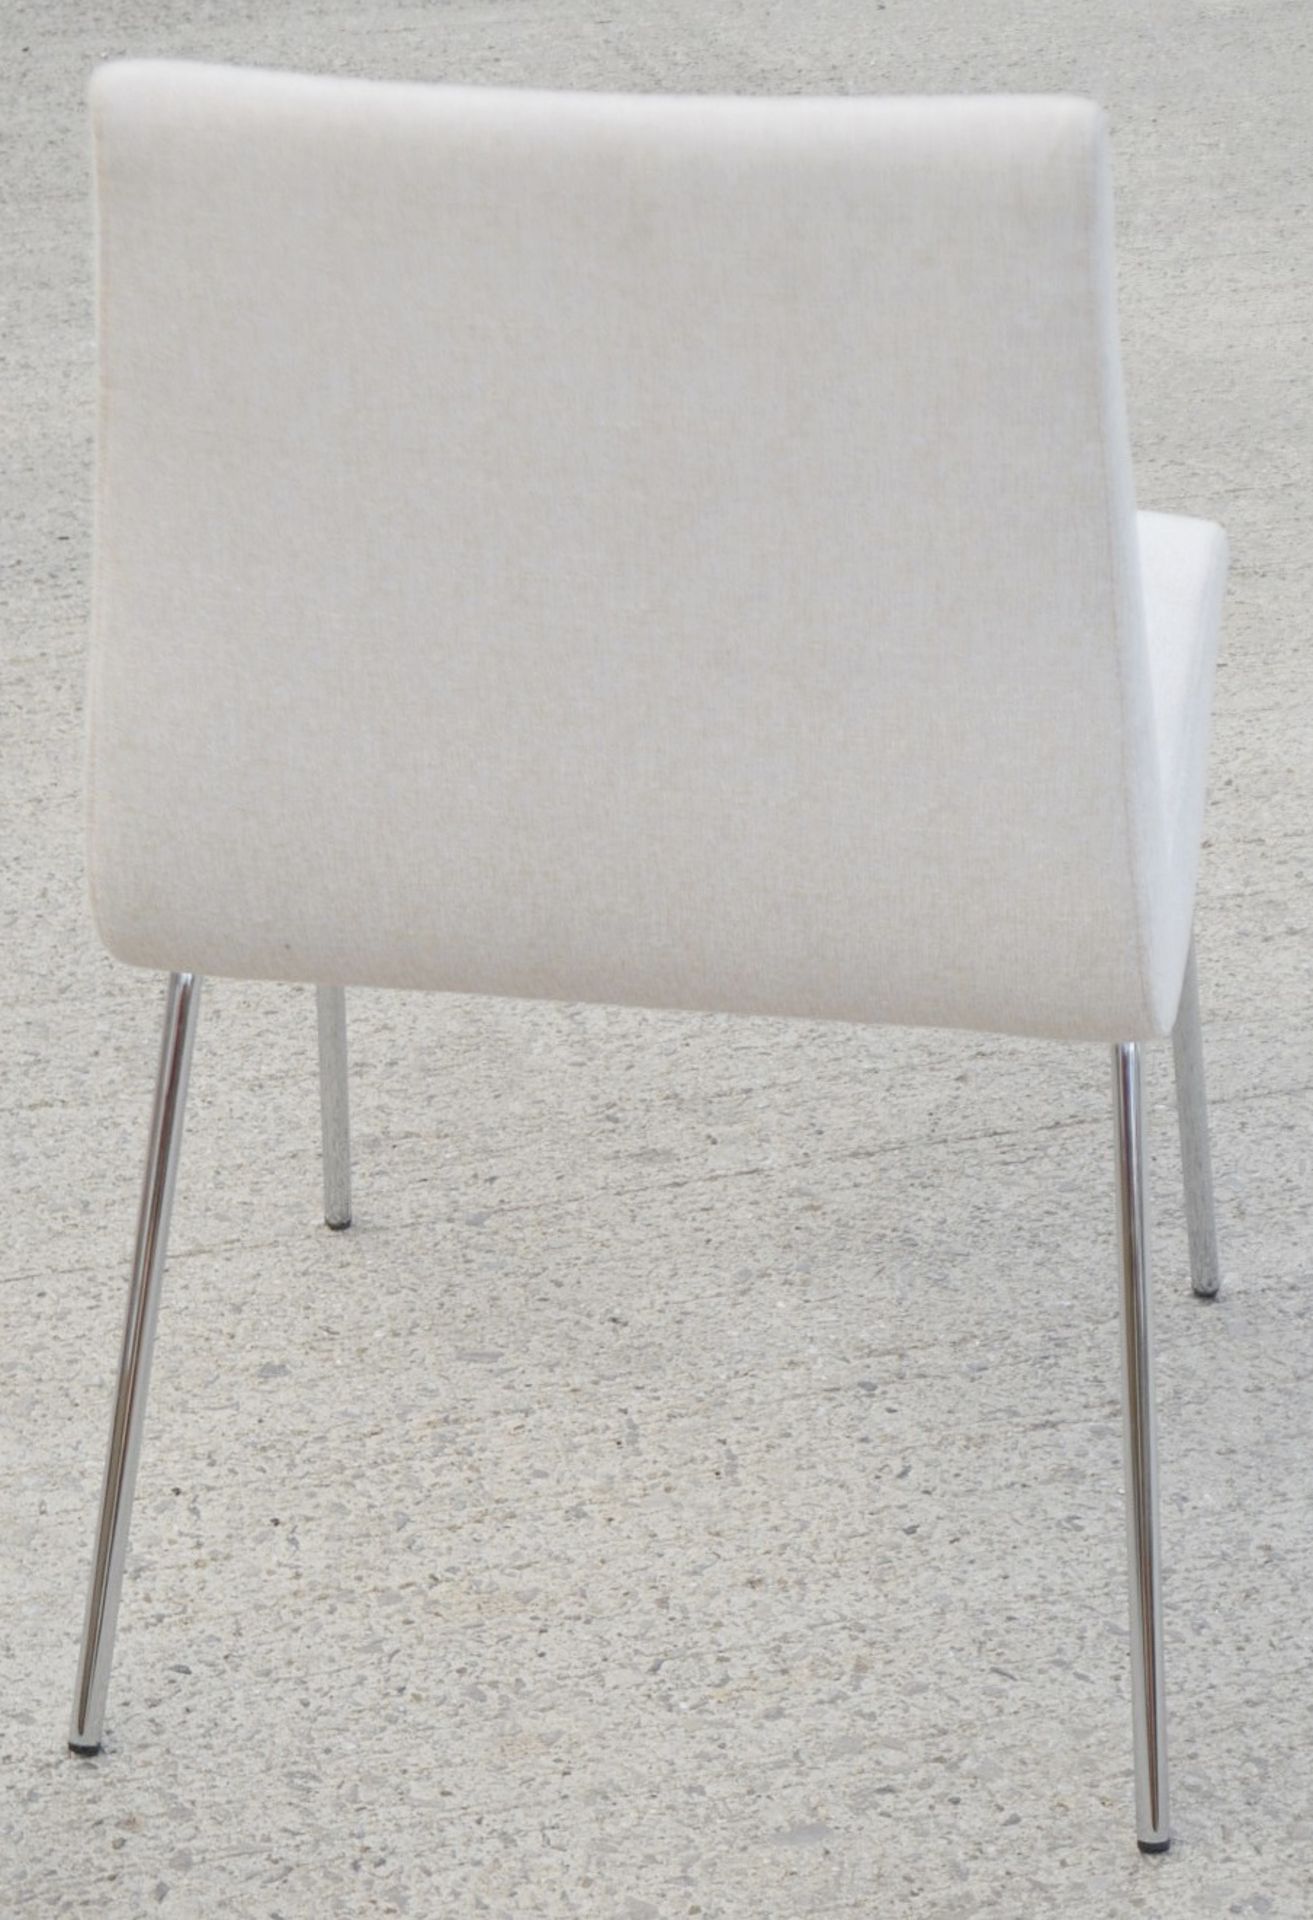 Pair Of LIGNE ROSET 'TV' Designer Dining Chairs In A Light Neutral Beige Fabric & Chromed Steel Legs - Image 9 of 9